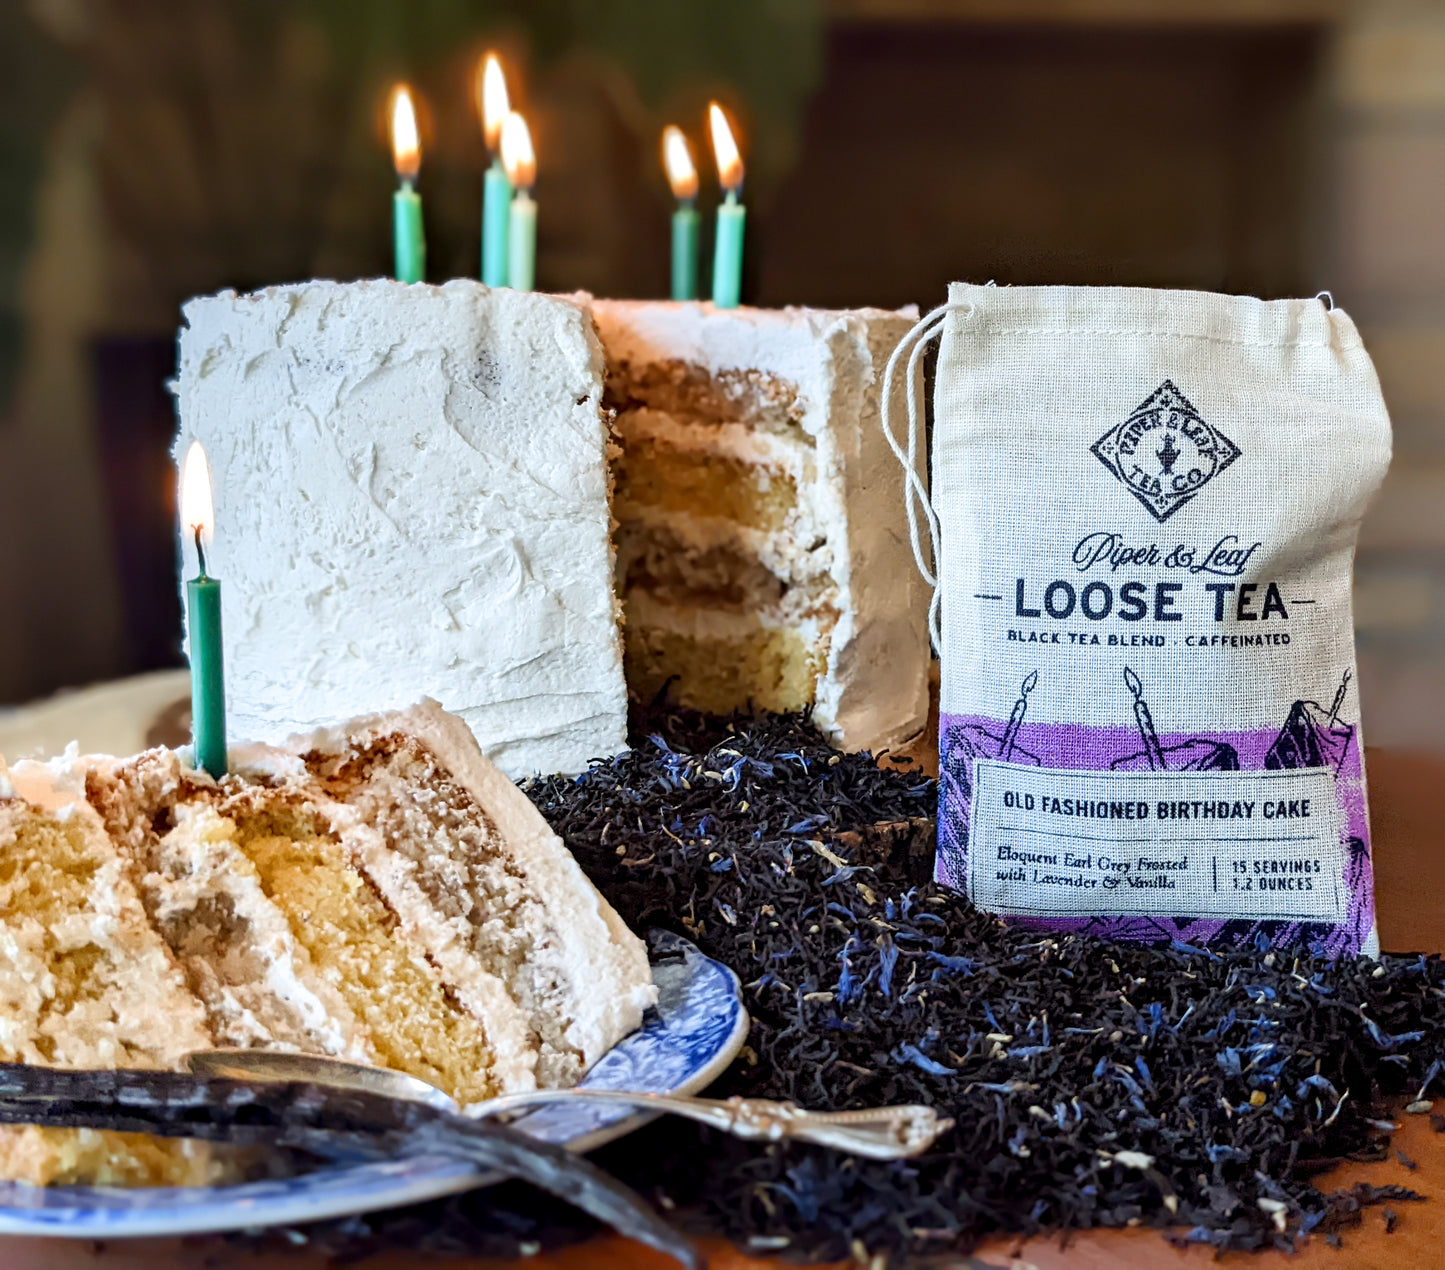 Old Fashioned Birthday Cake Muslin Bag of Loose Leaf Tea - 15 Servings